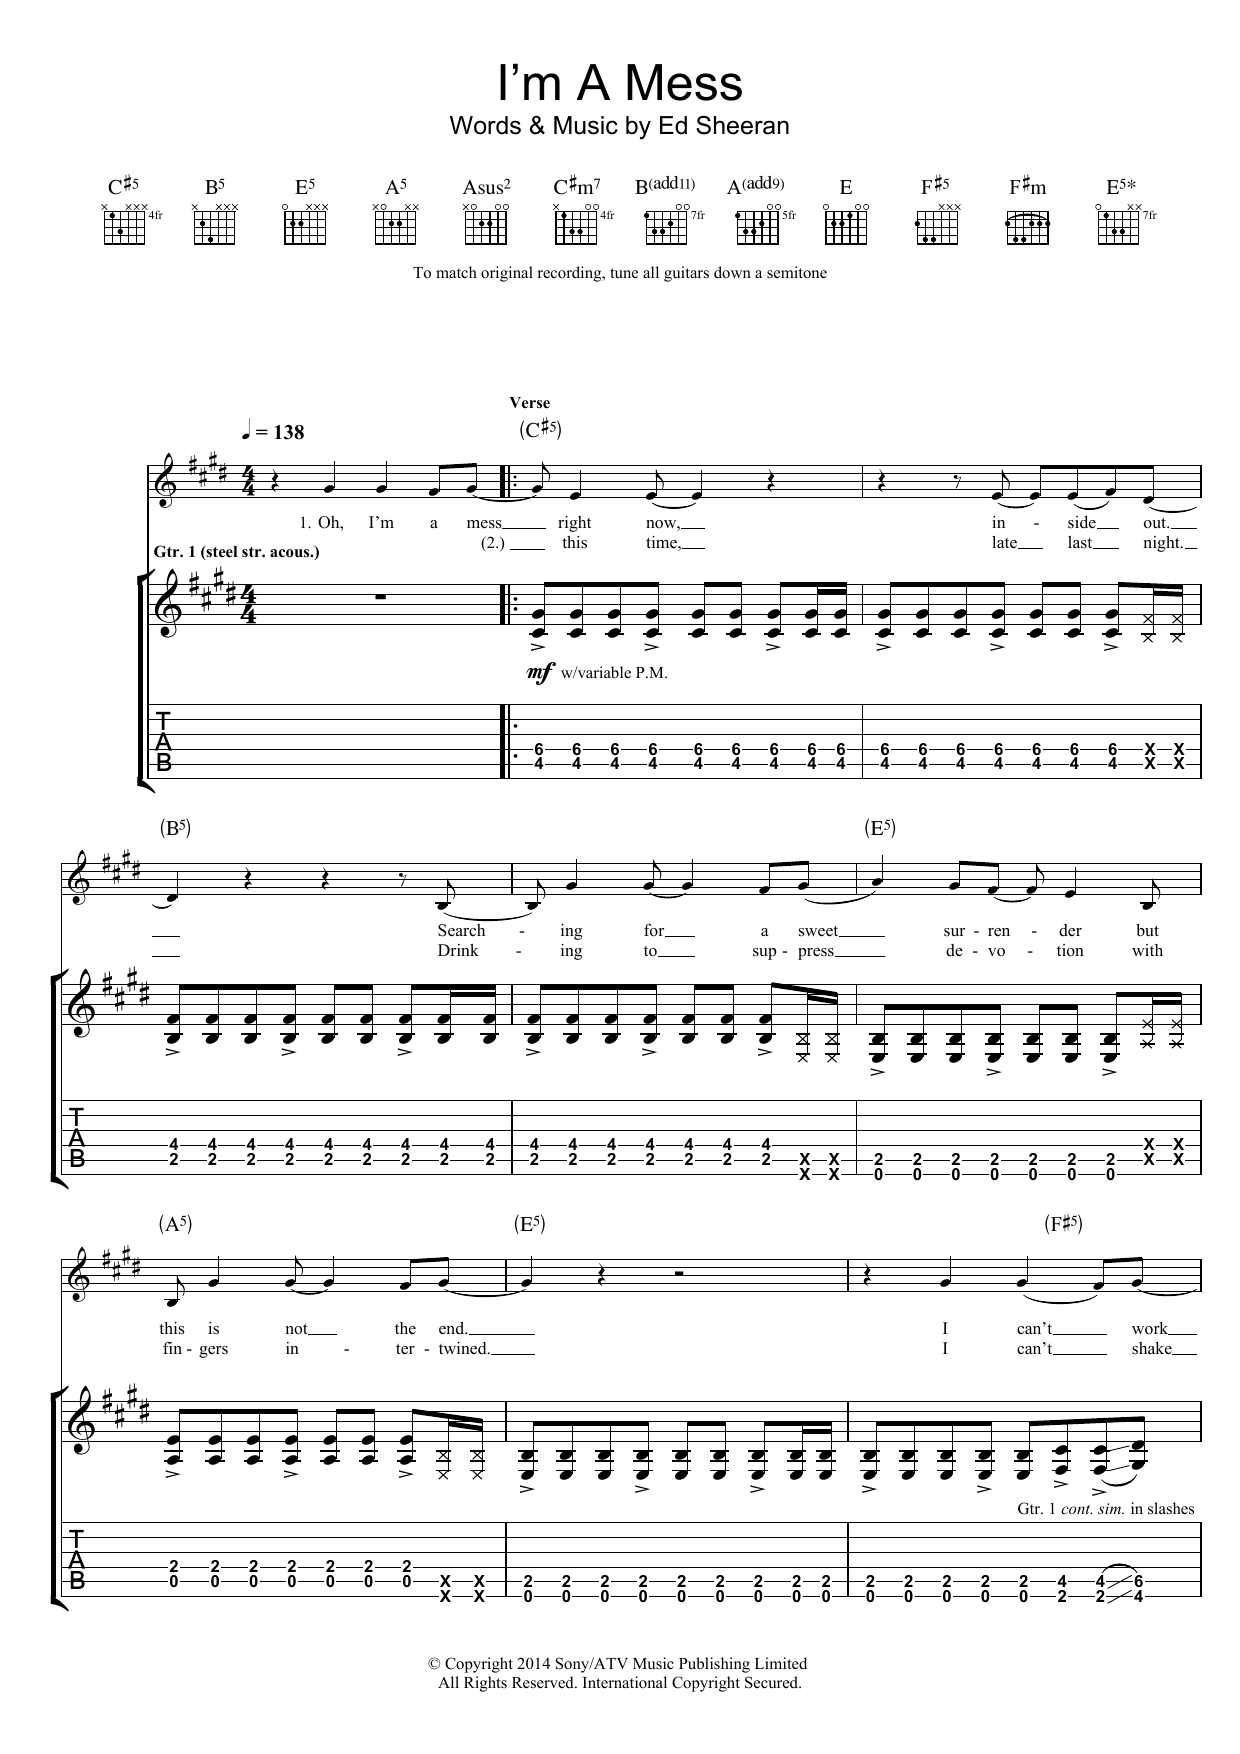 Ed Sheeran I'm A Mess Sheet Music Notes & Chords for Guitar Tab - Download or Print PDF